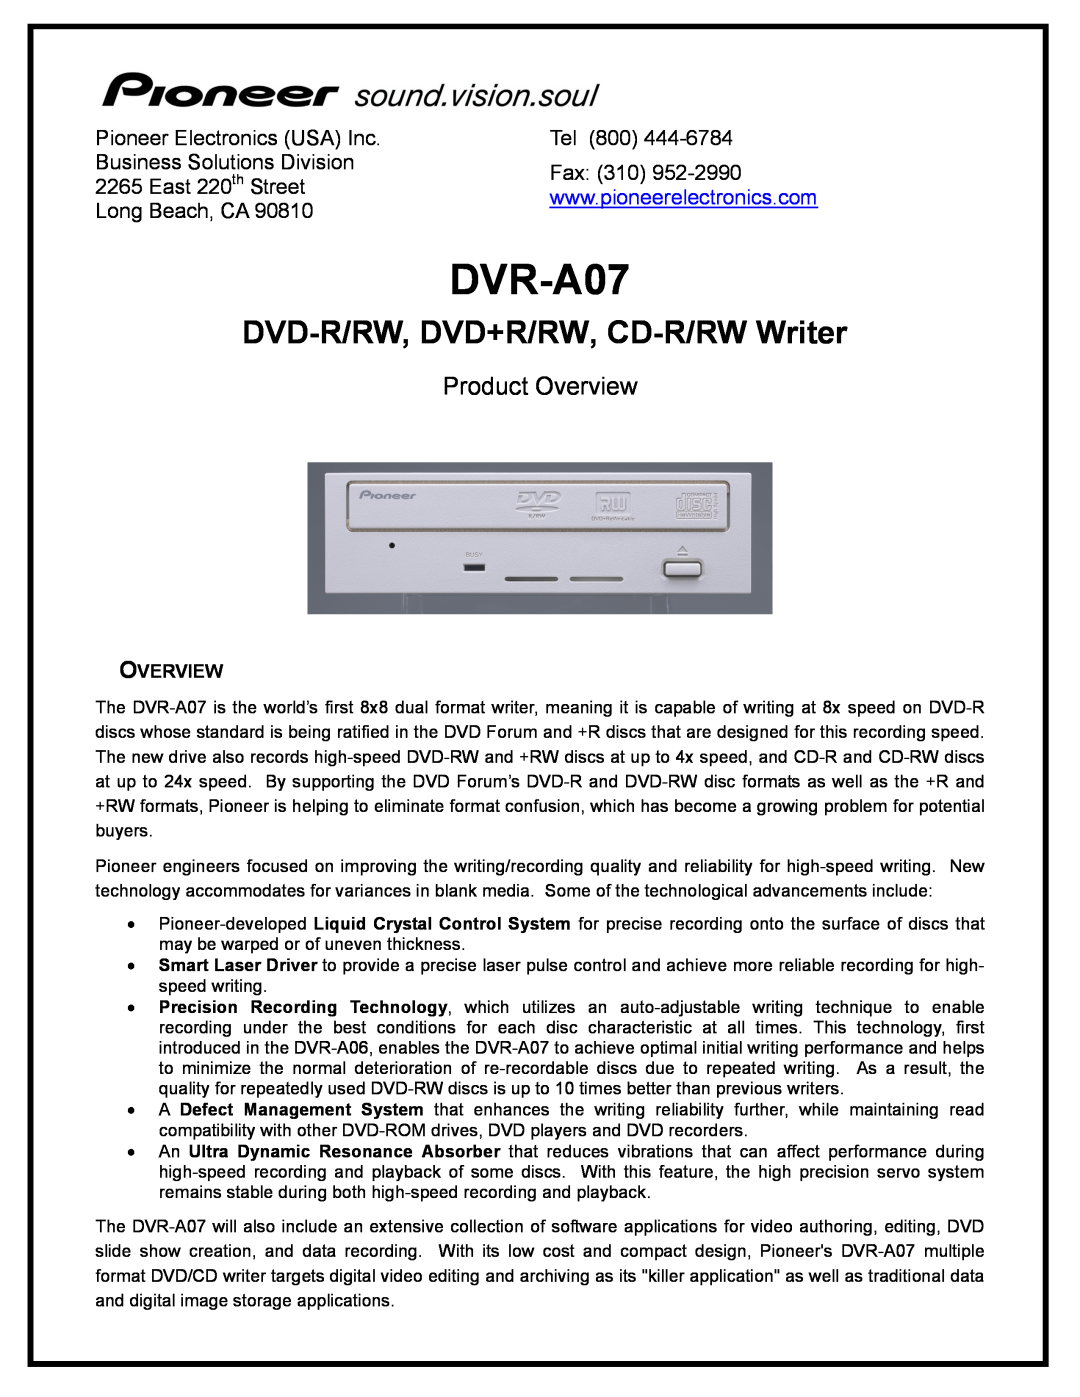 Pioneer DVR-107 manual DVR-A07, DVD-R/RW, DVD+R/RW, CD-R/RW Writer, Product Overview, Pioneer Electronics USA Inc, Tel 800 